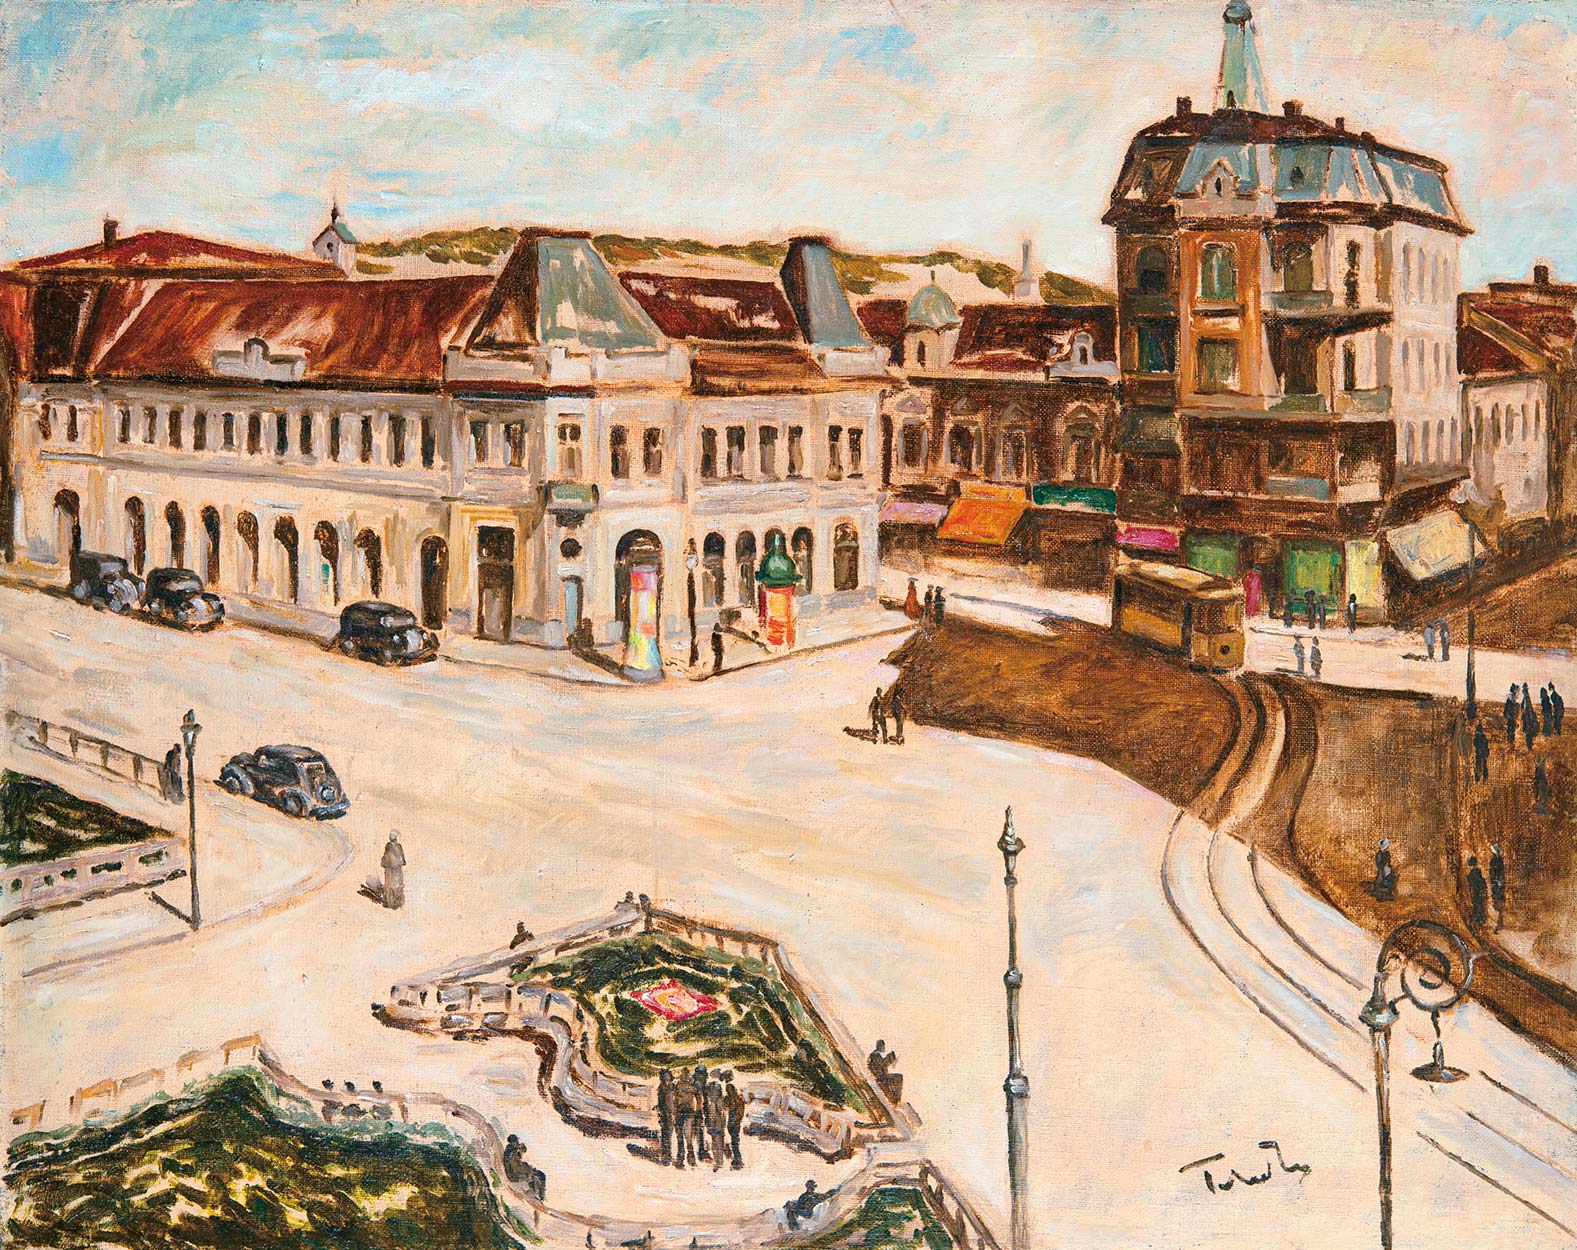 Tibor Ernő (1885-1945) The Black Eagle Palace on the Main Square in Nagyvárad